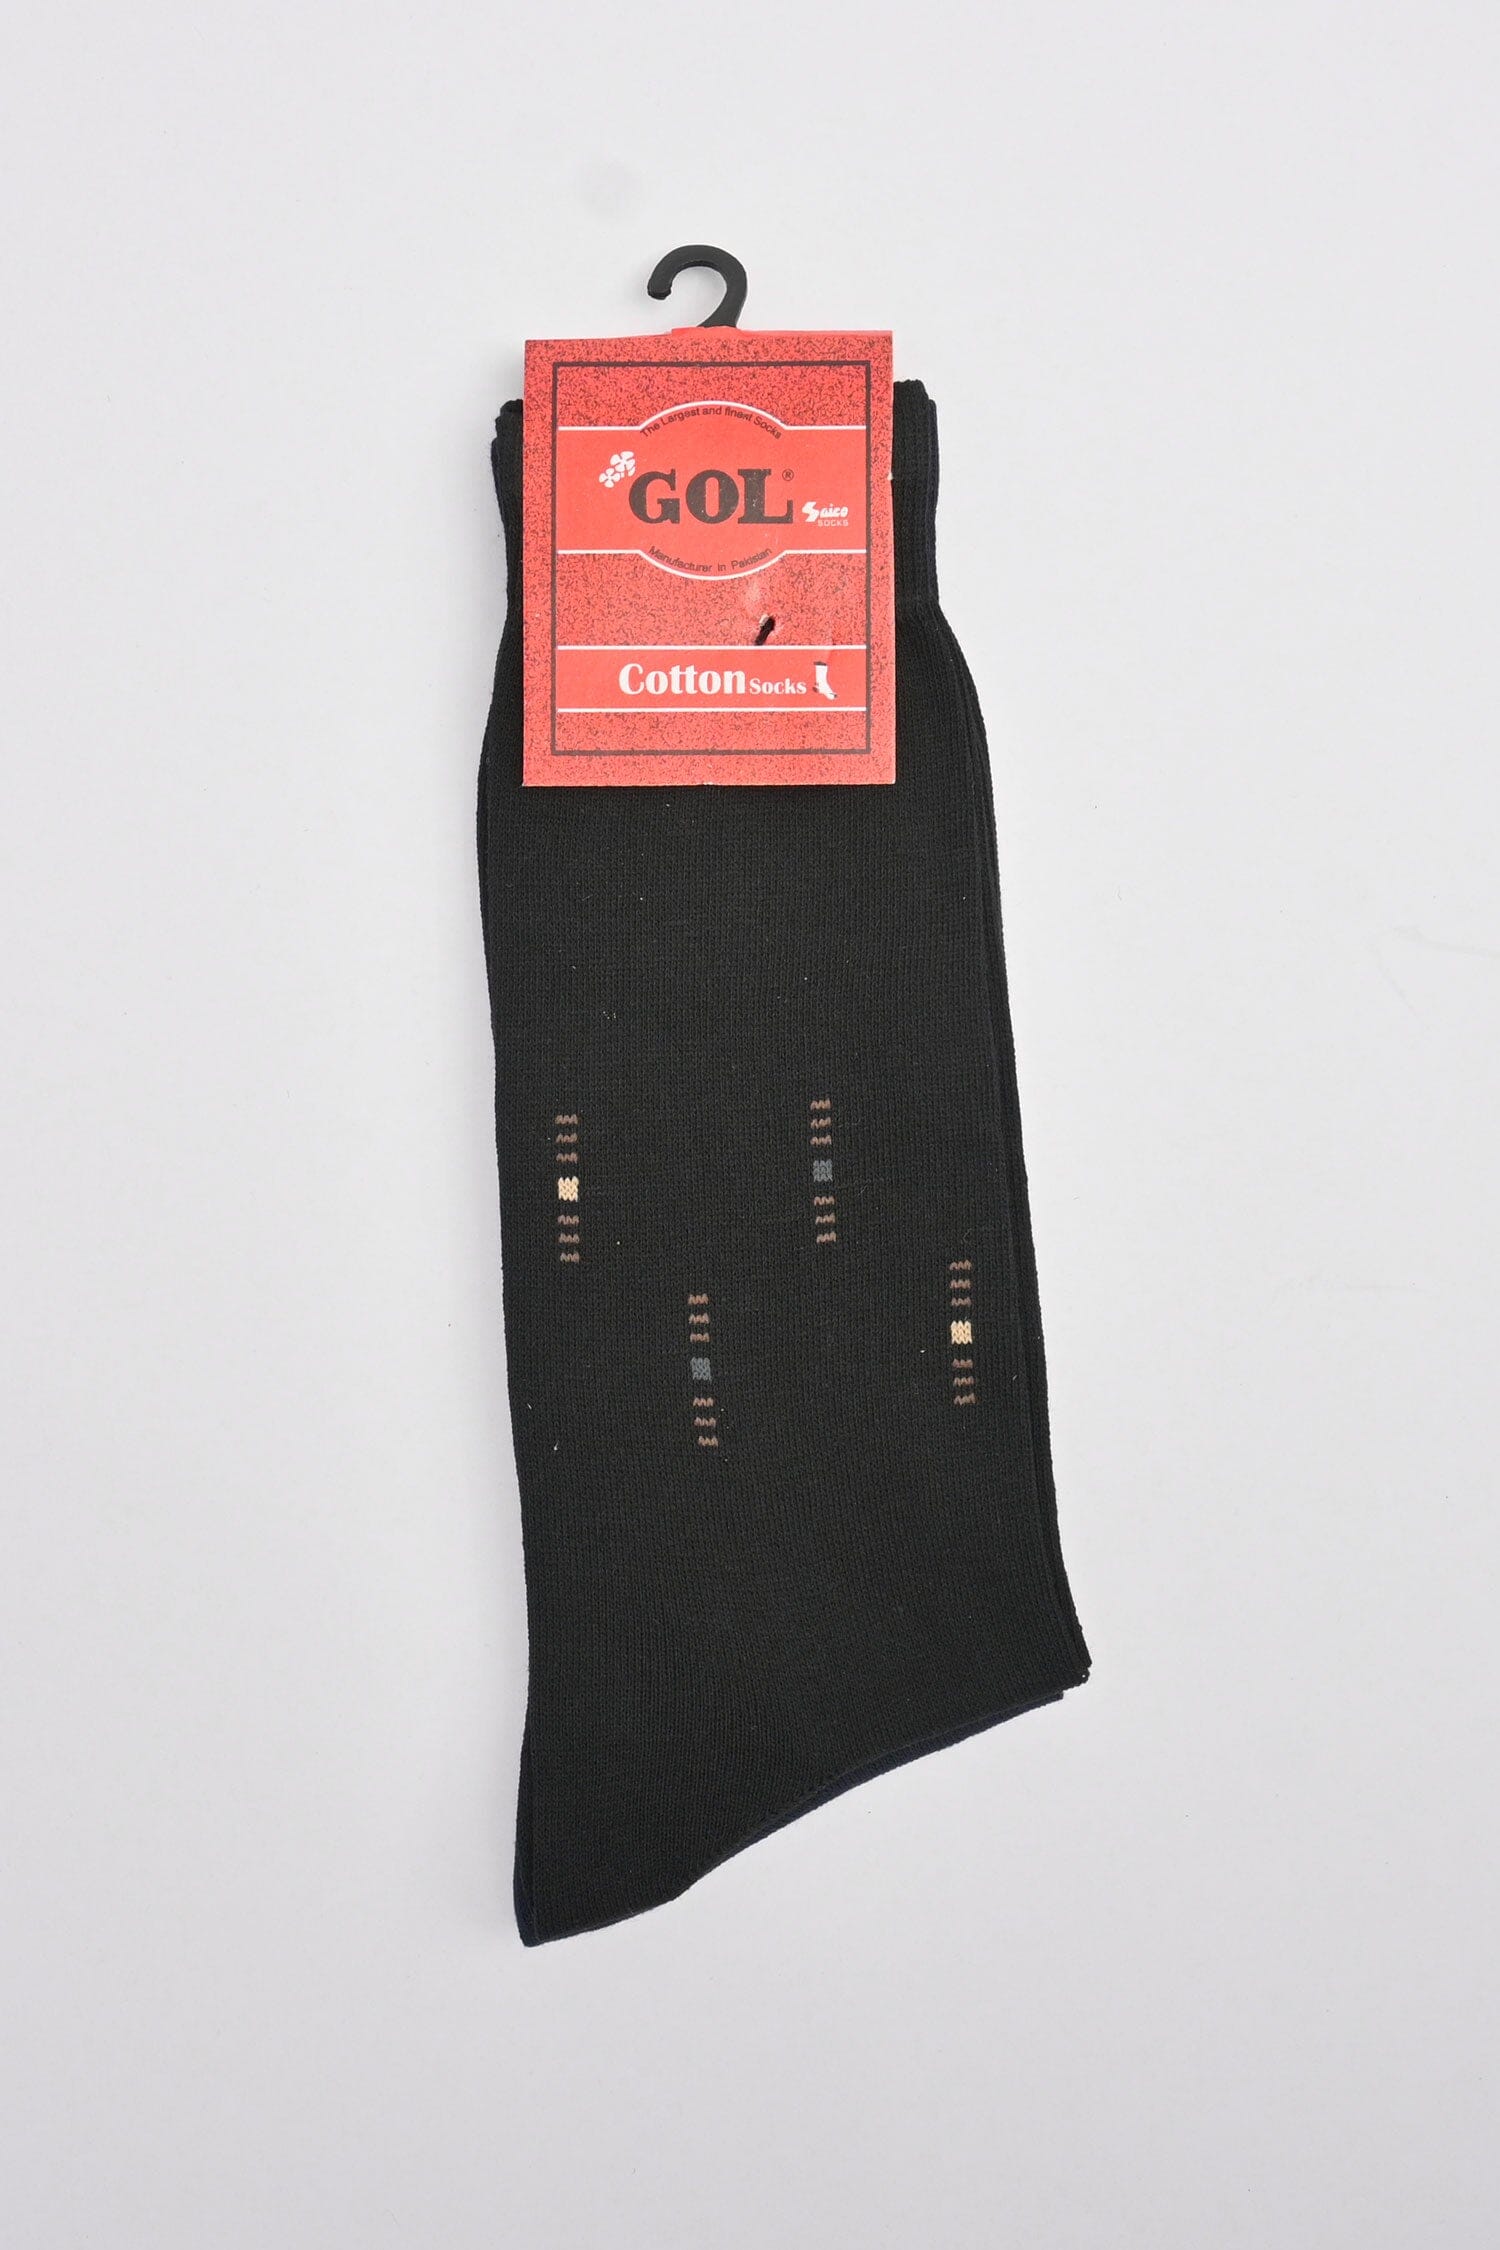 Gol Men's C-1 Classic Cotton Crew Socks - Pack Of 2 Pairs Socks KHP 